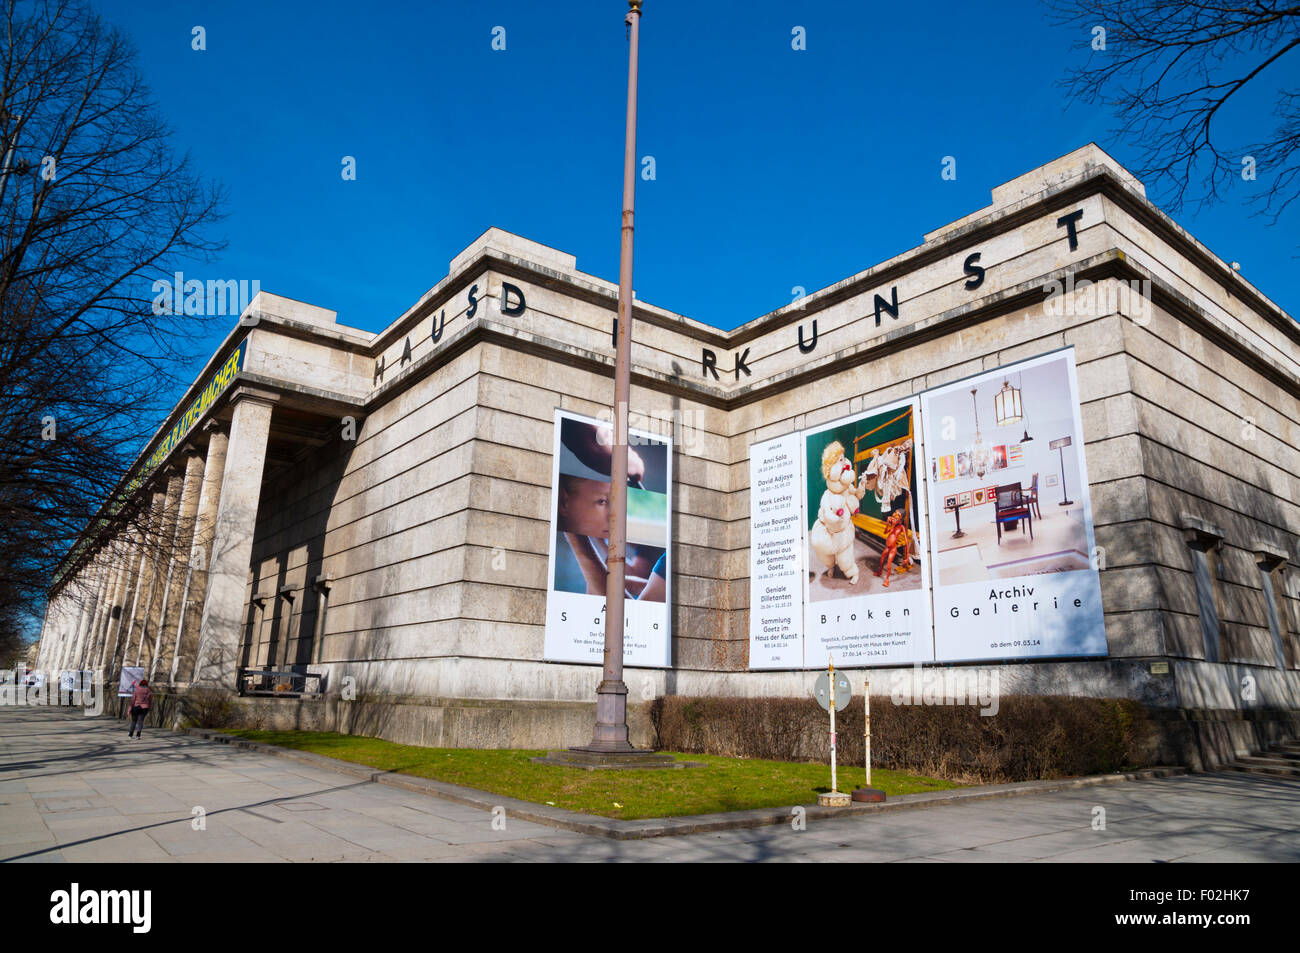 Haus der Kunst, art gallery, Altstadt-Lehel, Munich, Bavaria, Germany Stock Photo